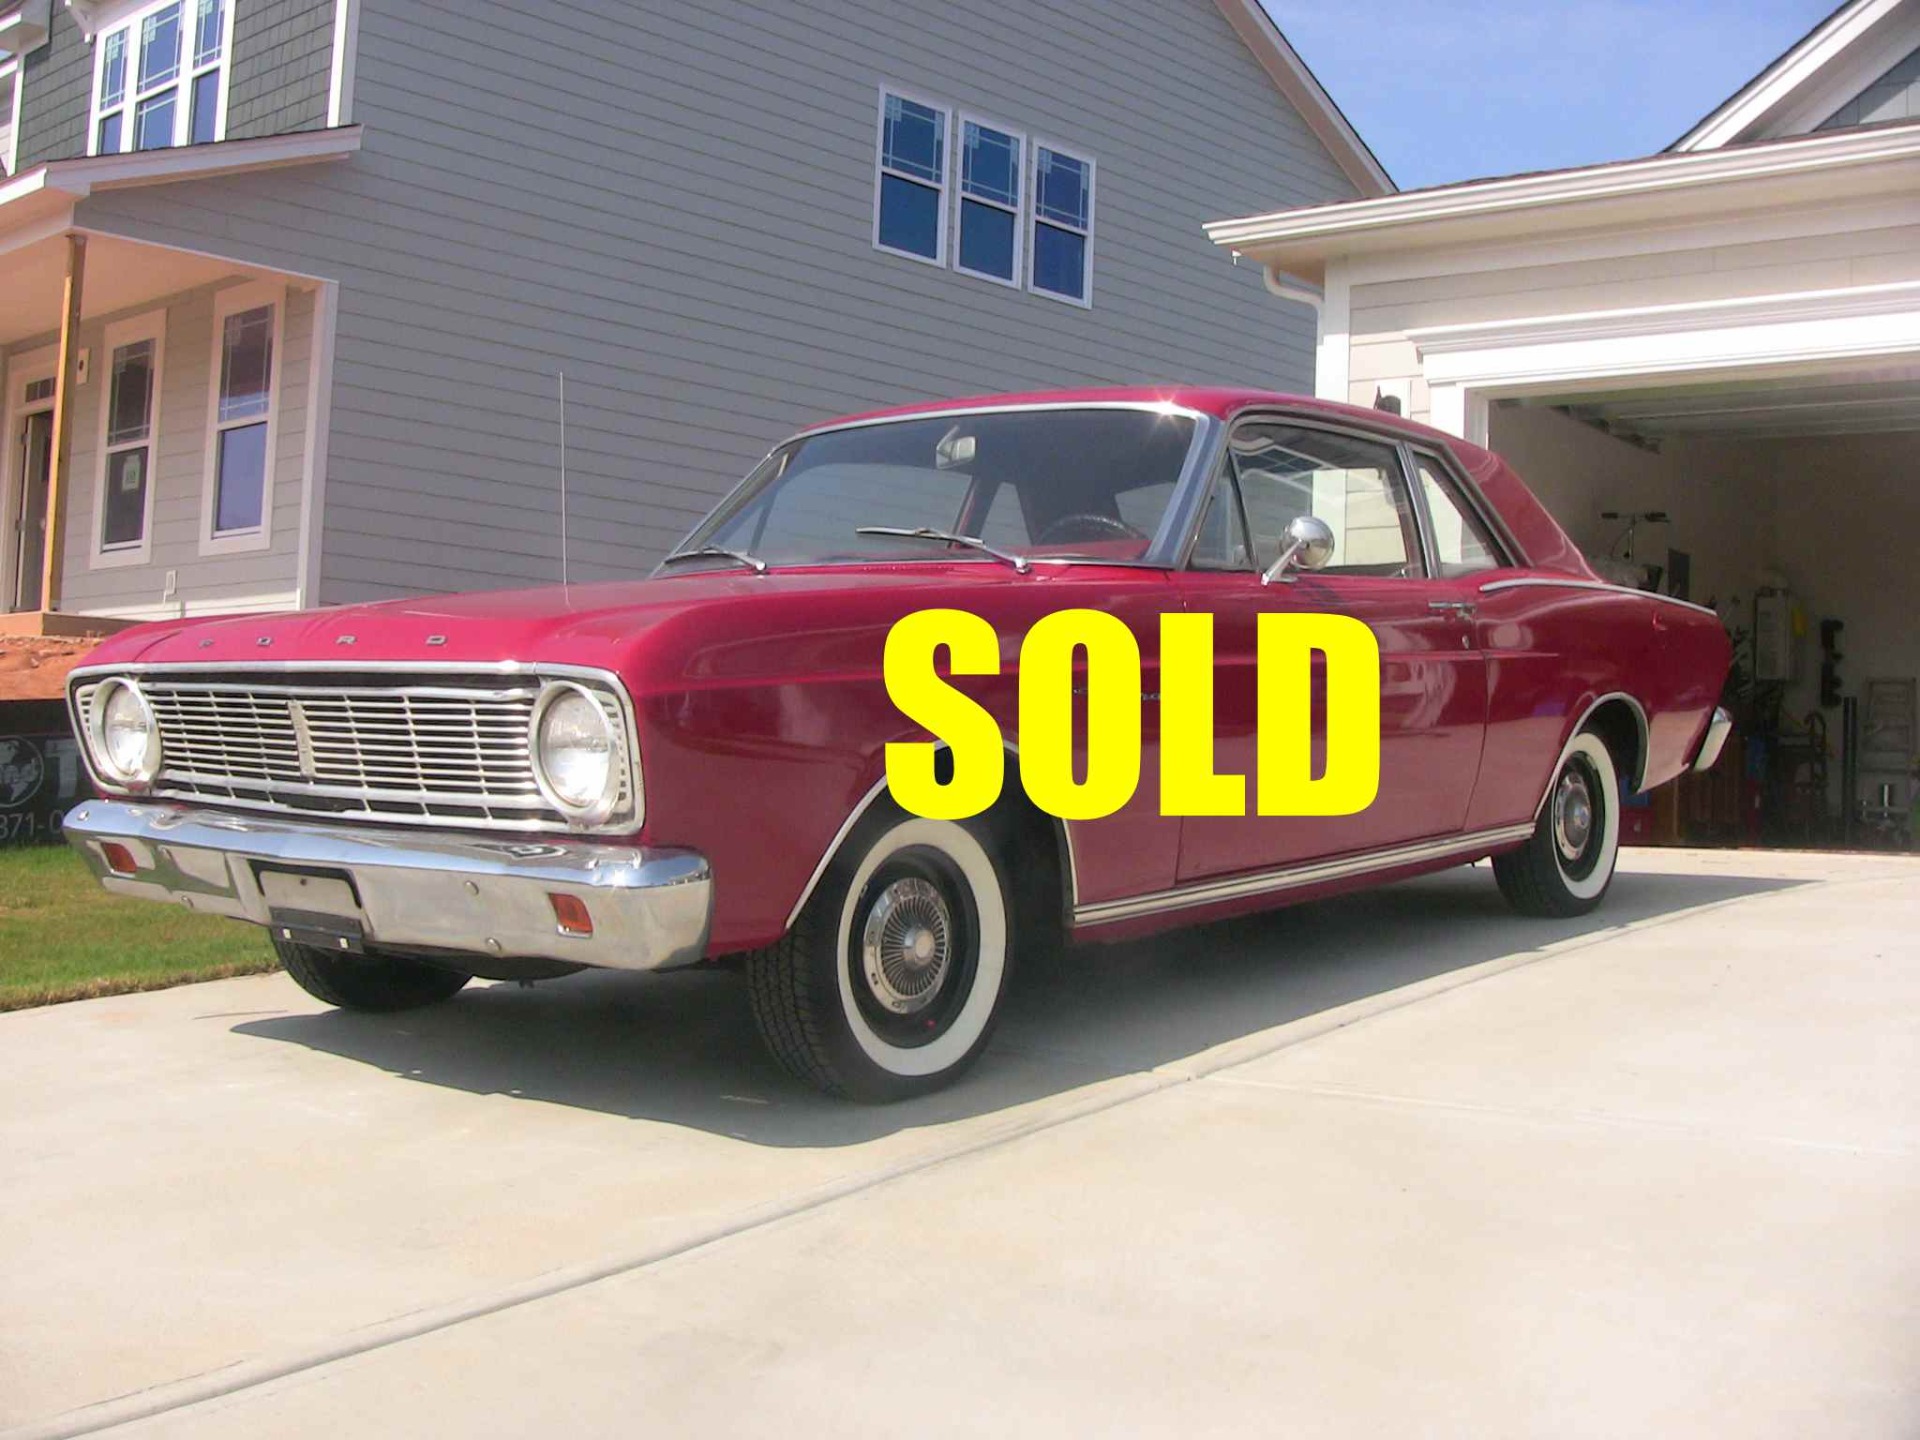 Used 1966 Ford Falcon Futura  144 , For Sale $8700, Call Us: (704) 996-3735